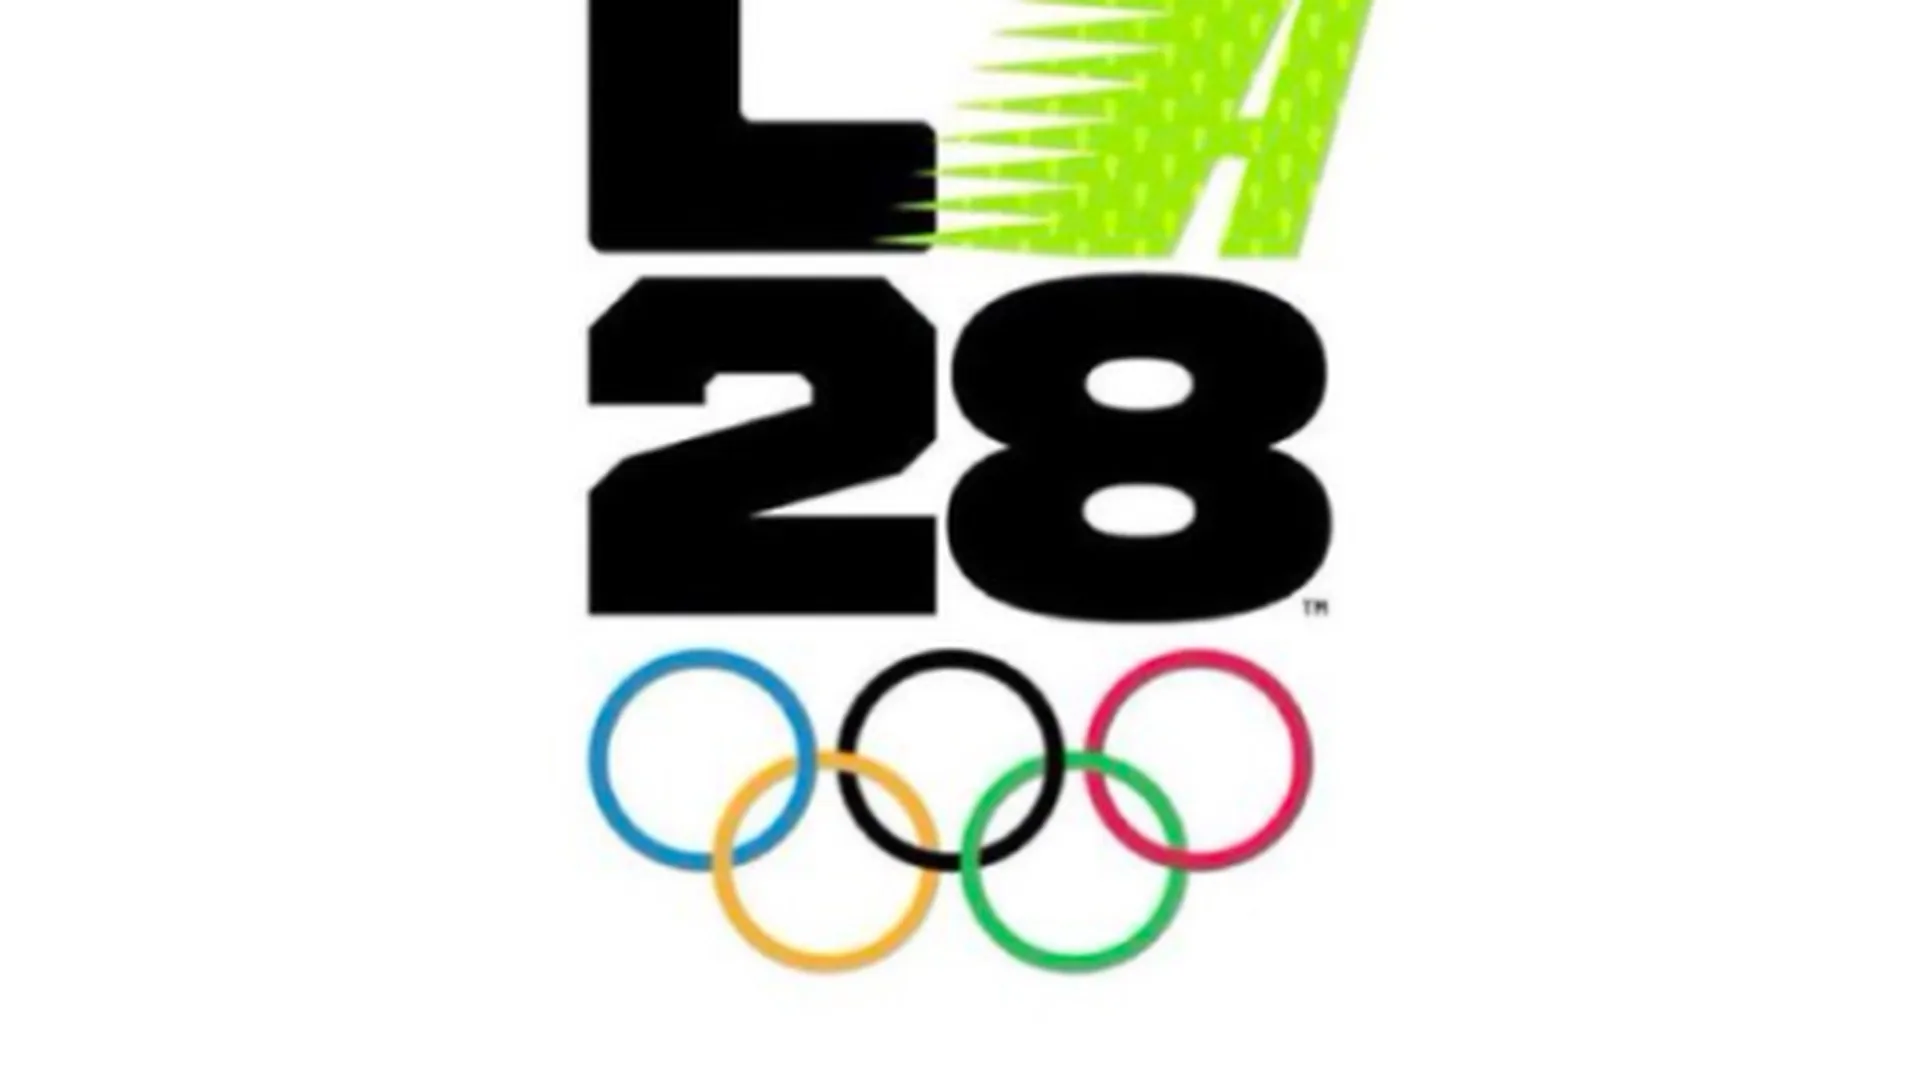 Билли Айлиш представила свой логотип для Олимпиады-2028